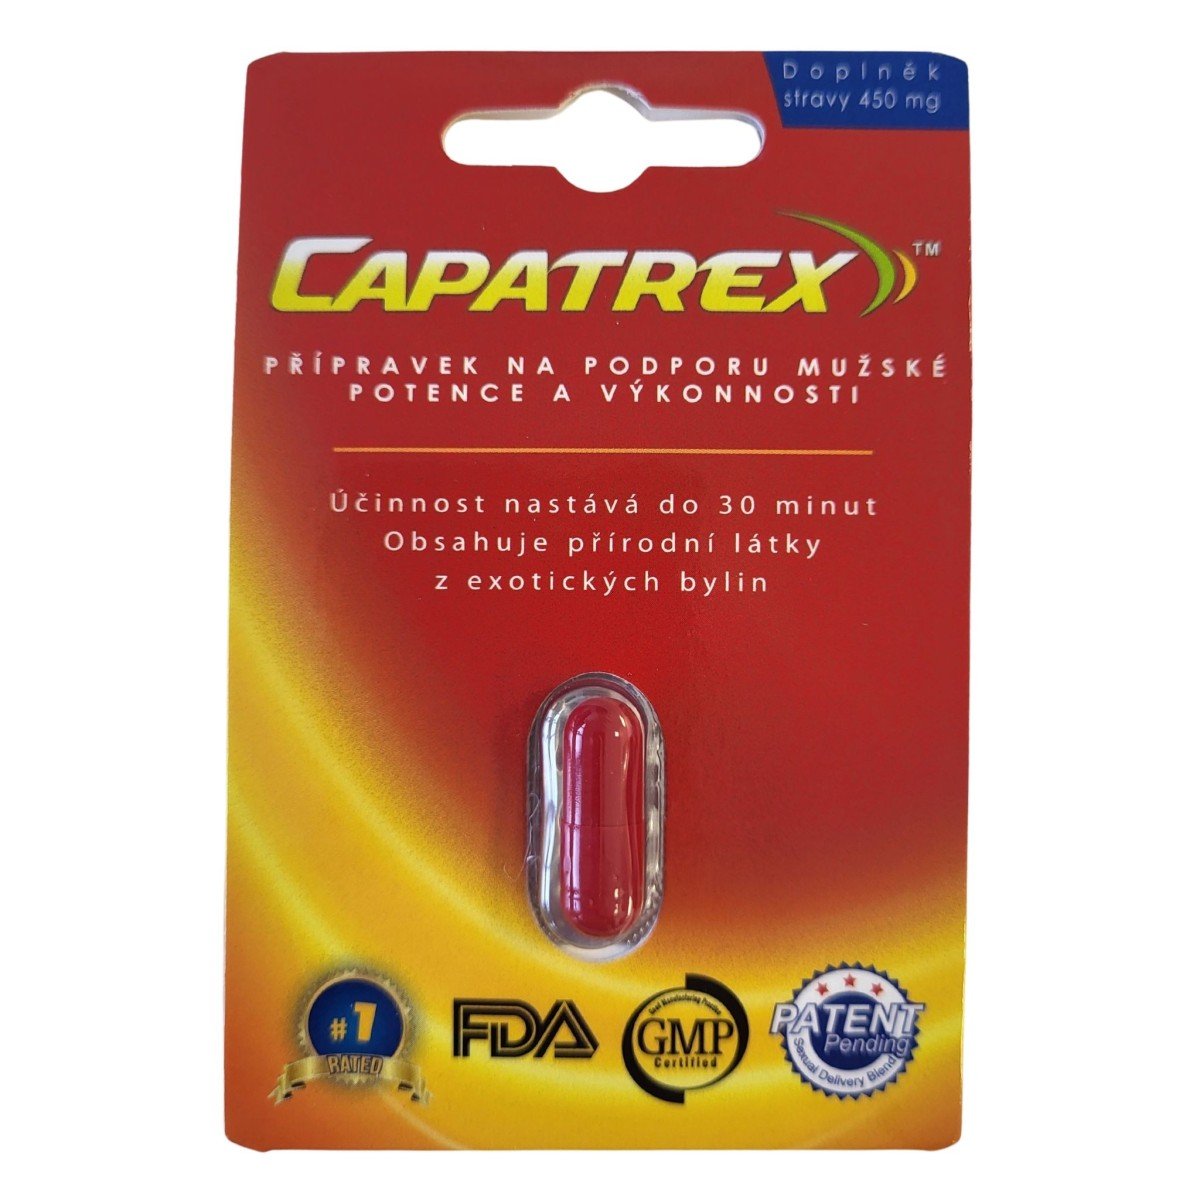 Capatrex 1 tobolka, rychlá podpora erekce a posílení libida